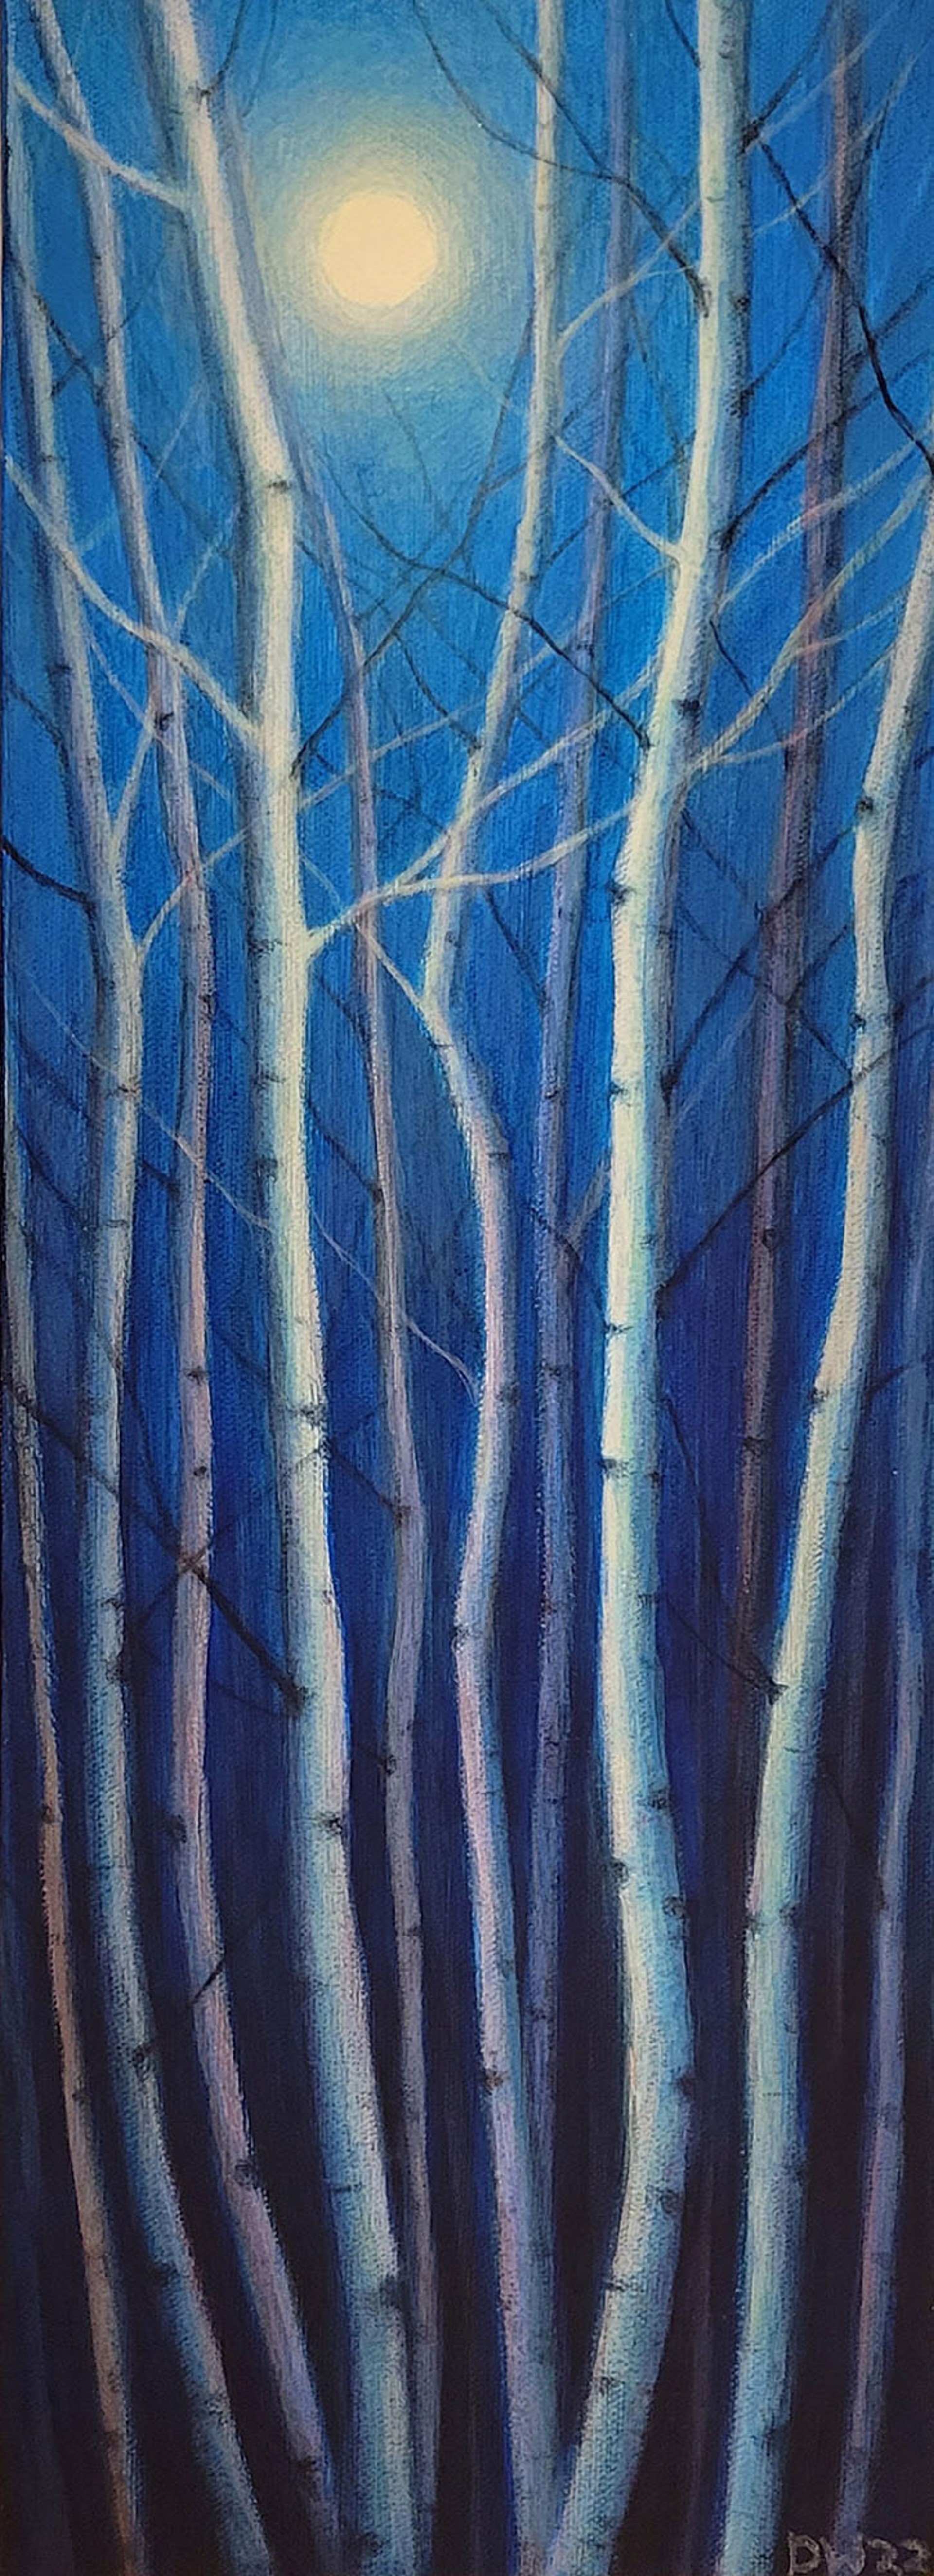 Moonlit Trees by Debbie Wozniak-Bonk